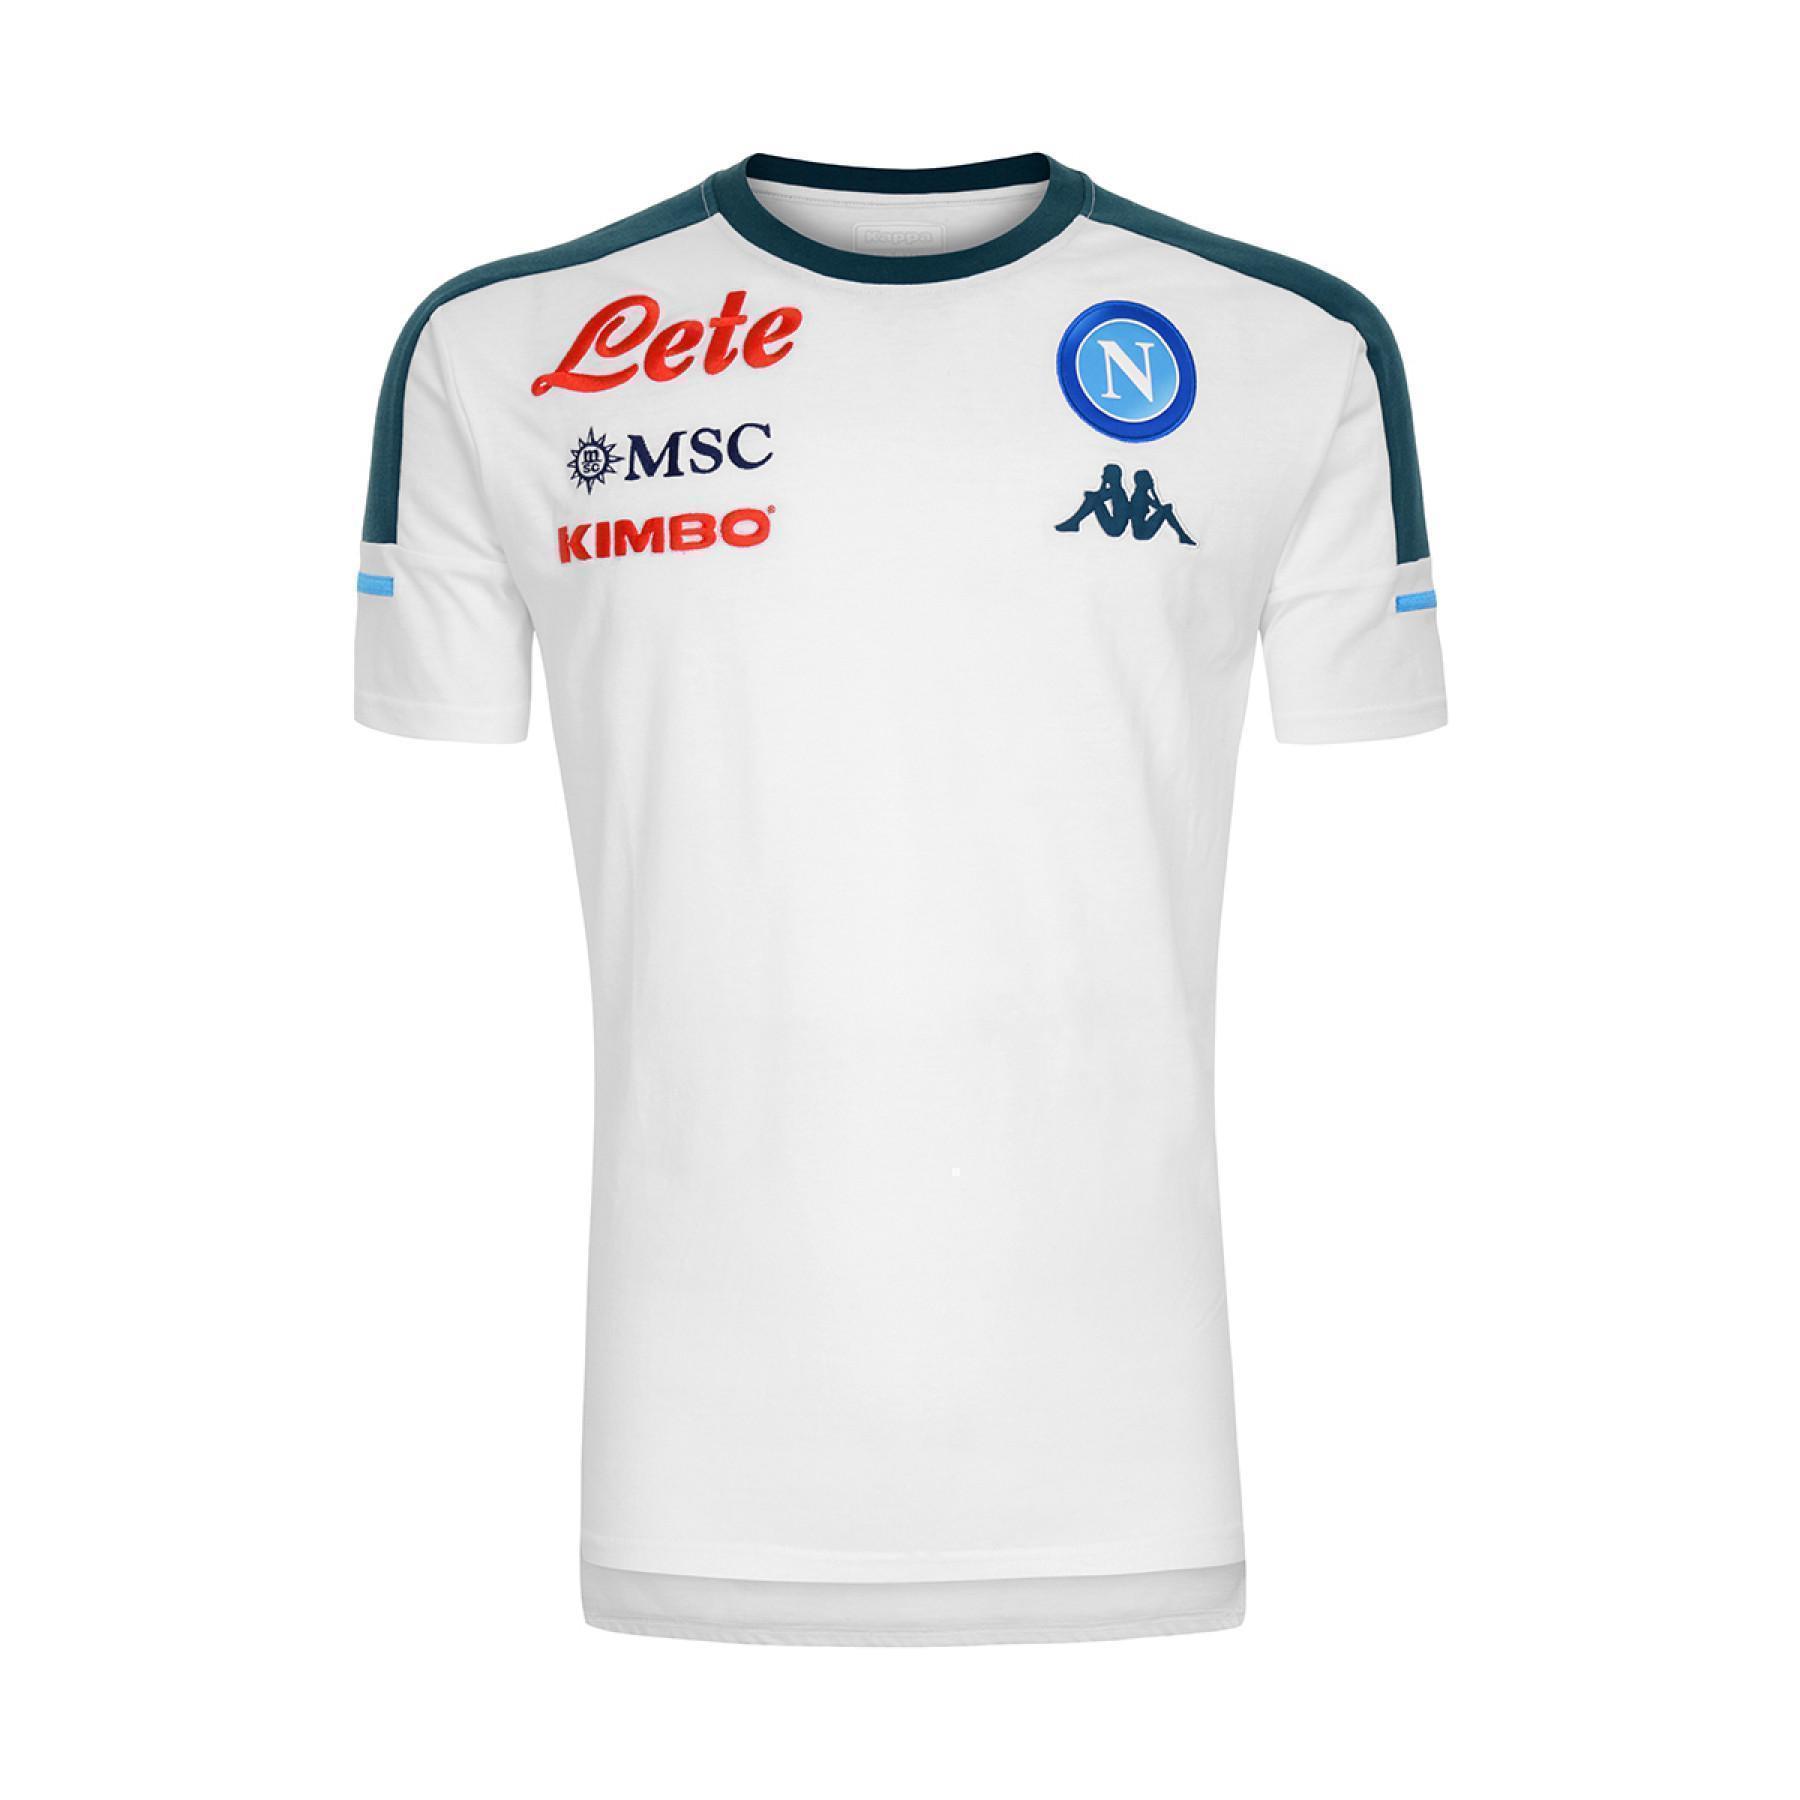 T-shirt SSC Napoli 2020/21 ayba 4